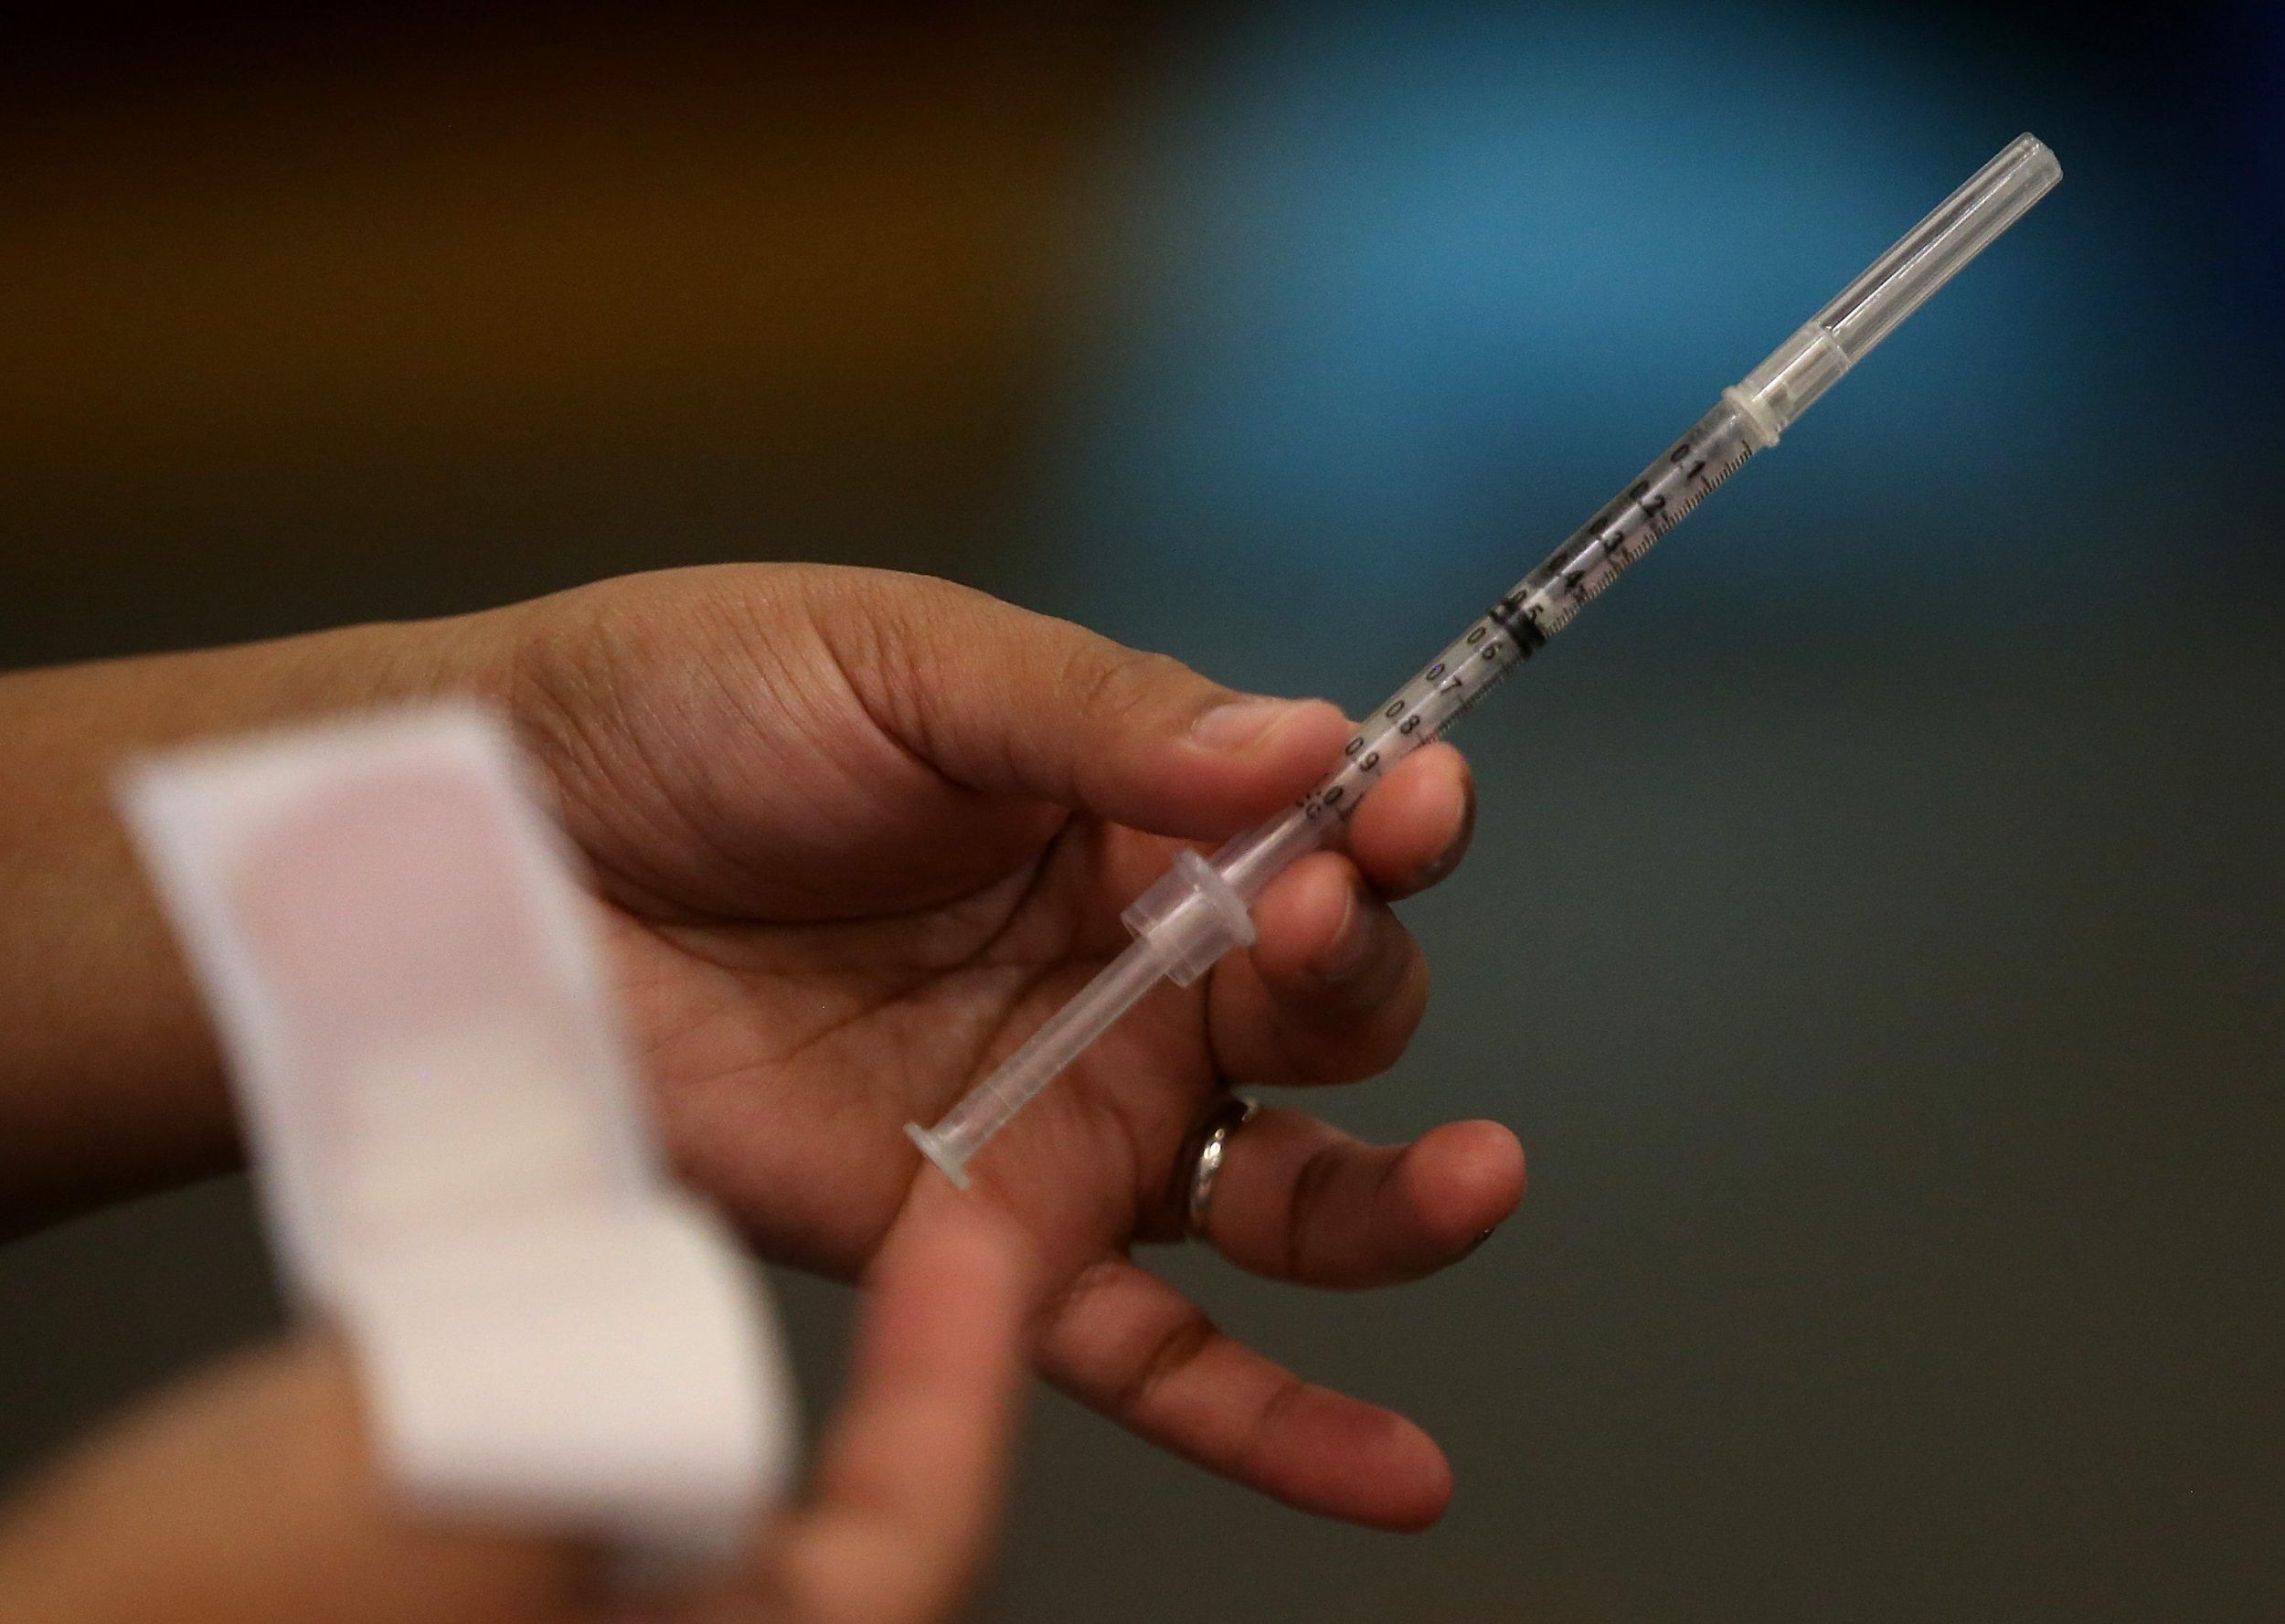 ВОЗ одобрила индийскую вакцину Covaxin против коронавируса: что известно о препарате